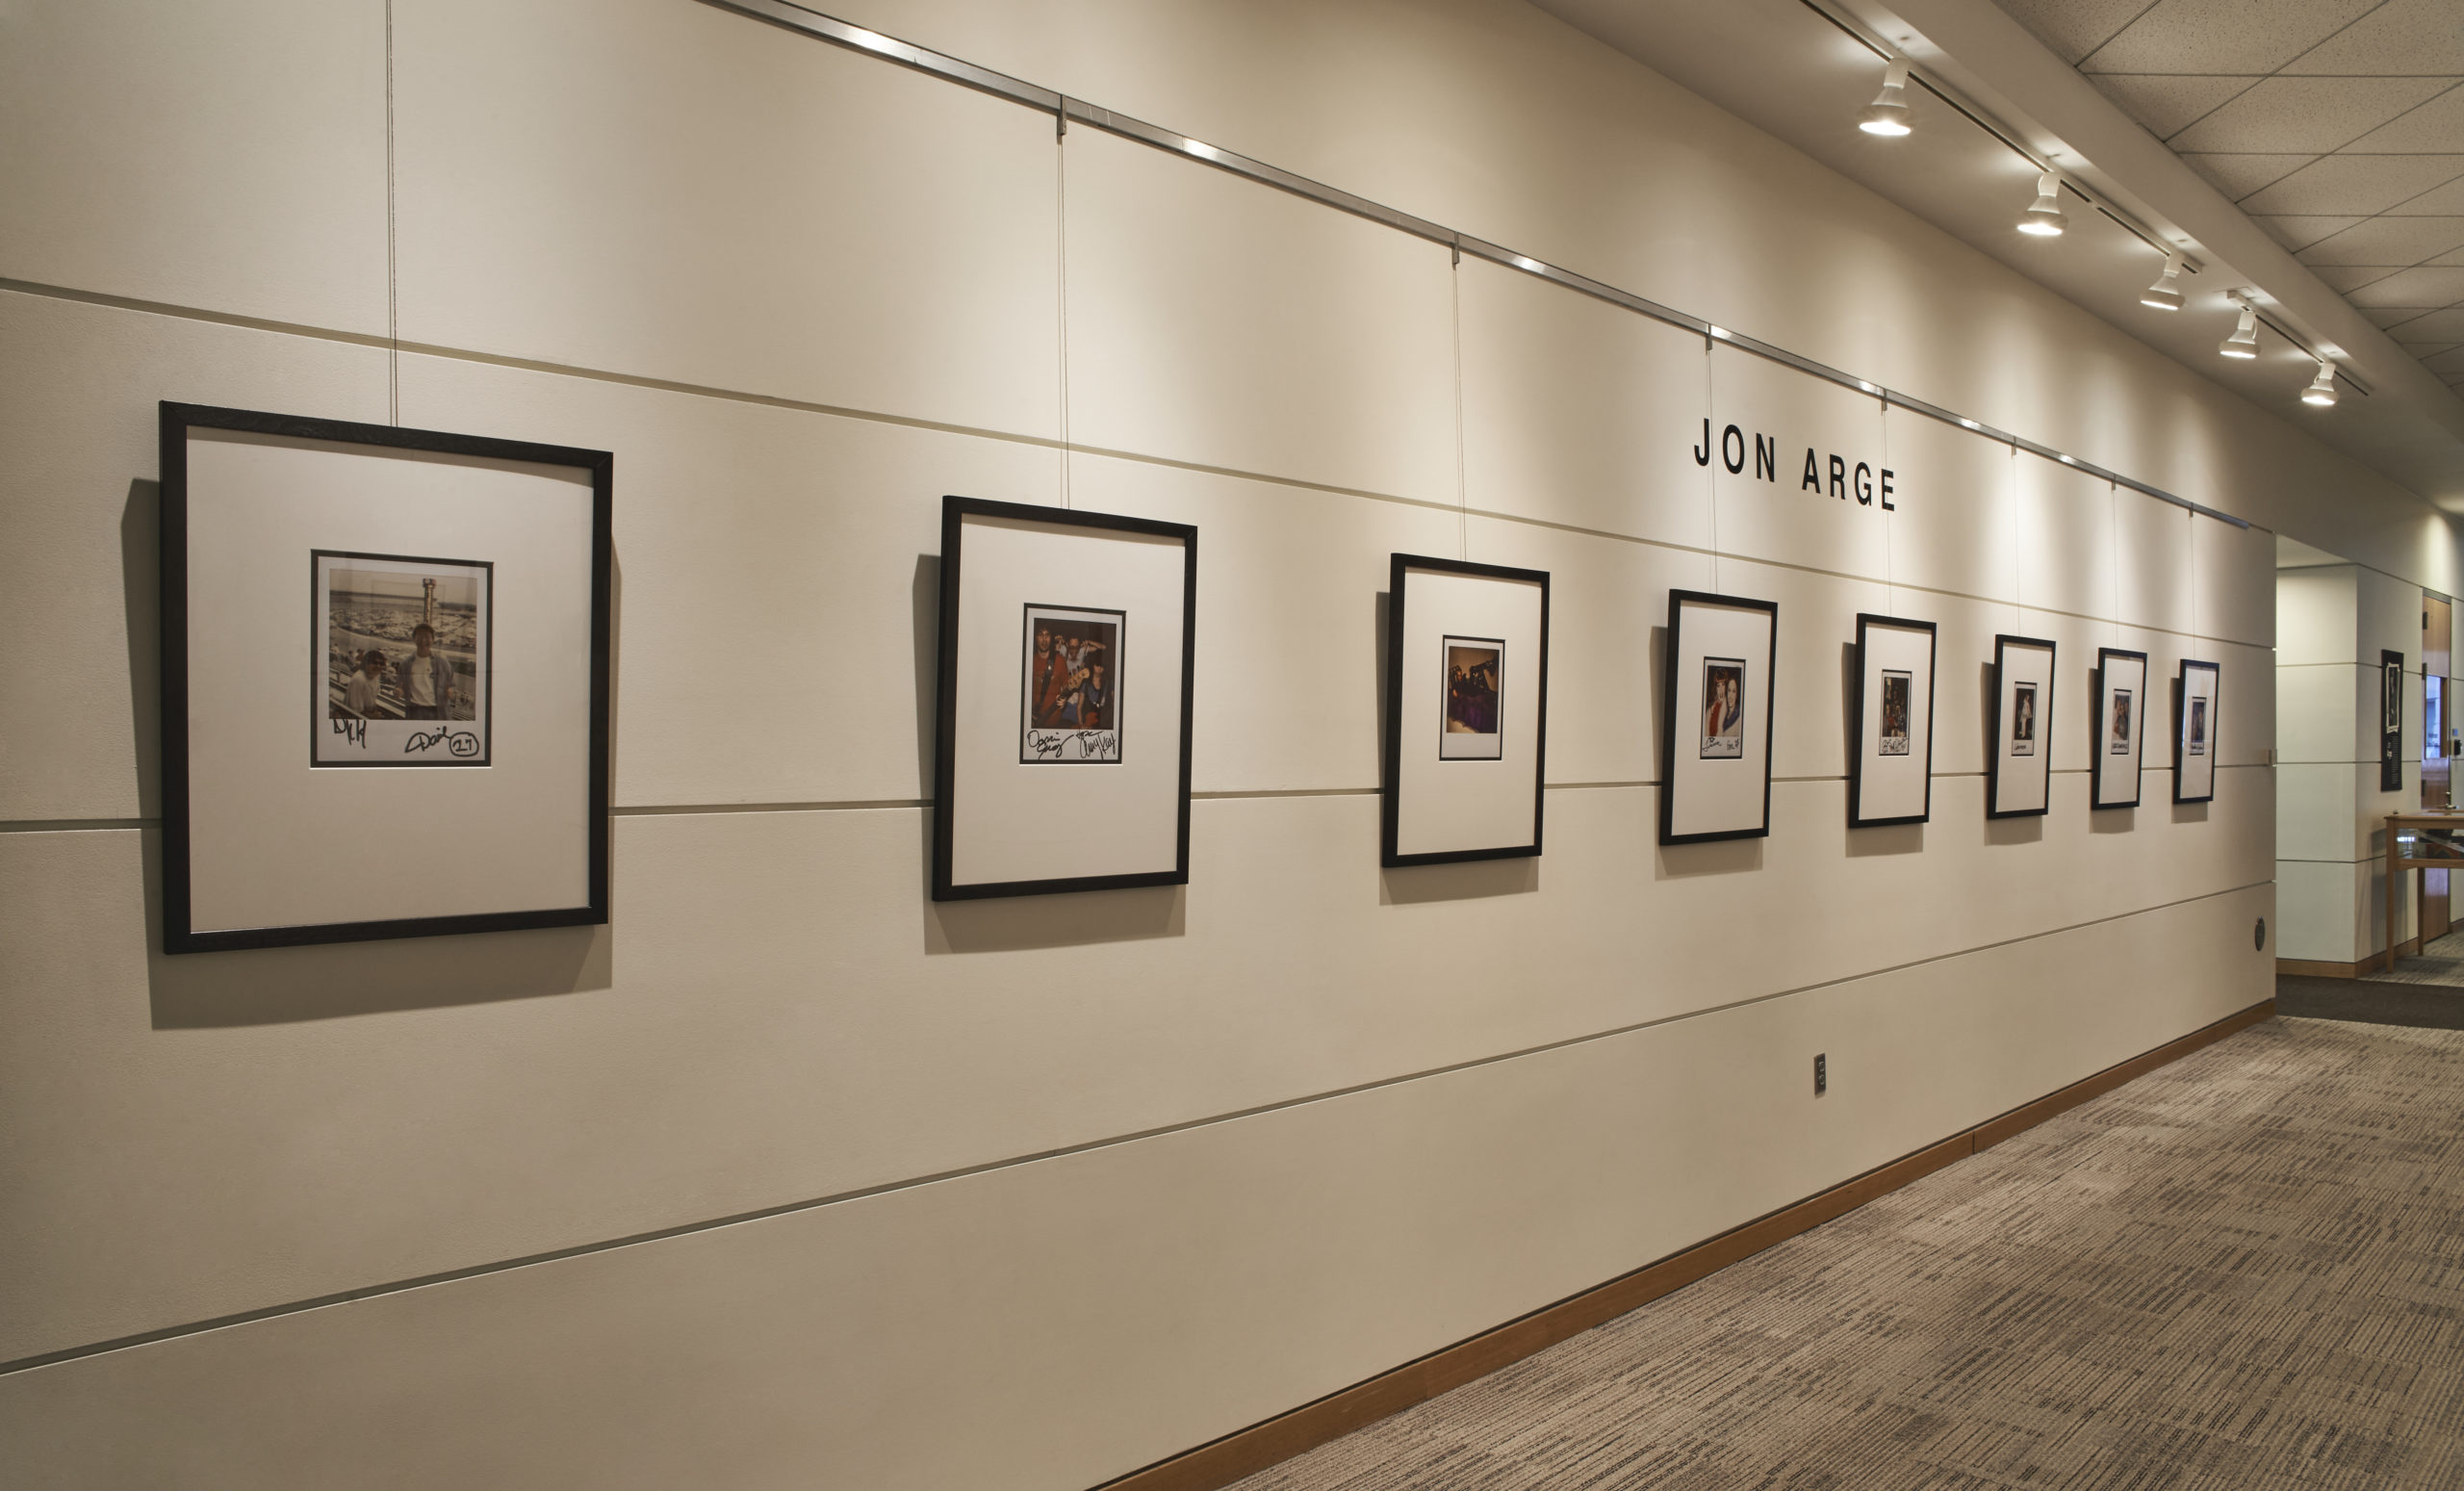 Photograph of exhibit corridor walls filled with framed Jon Arge Polaroid photographs